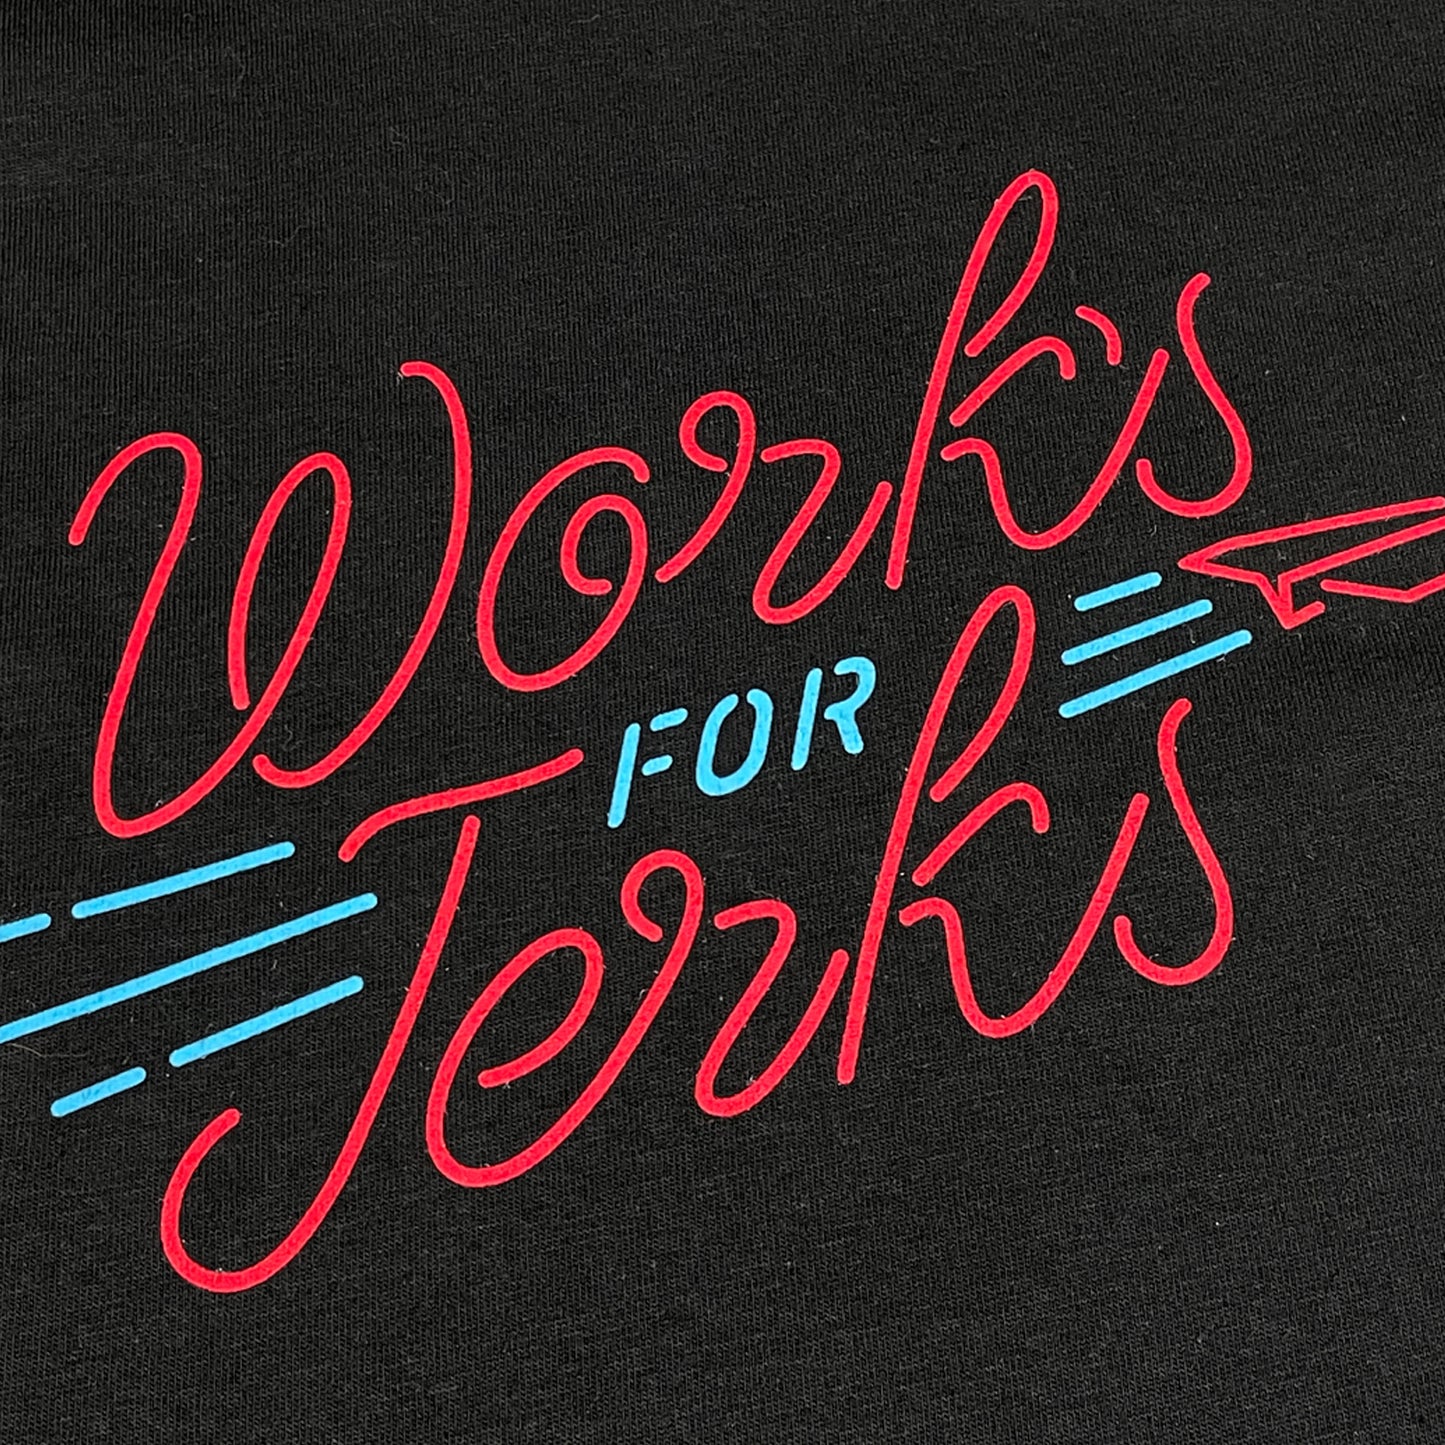 Works For Jerks Tee - Black